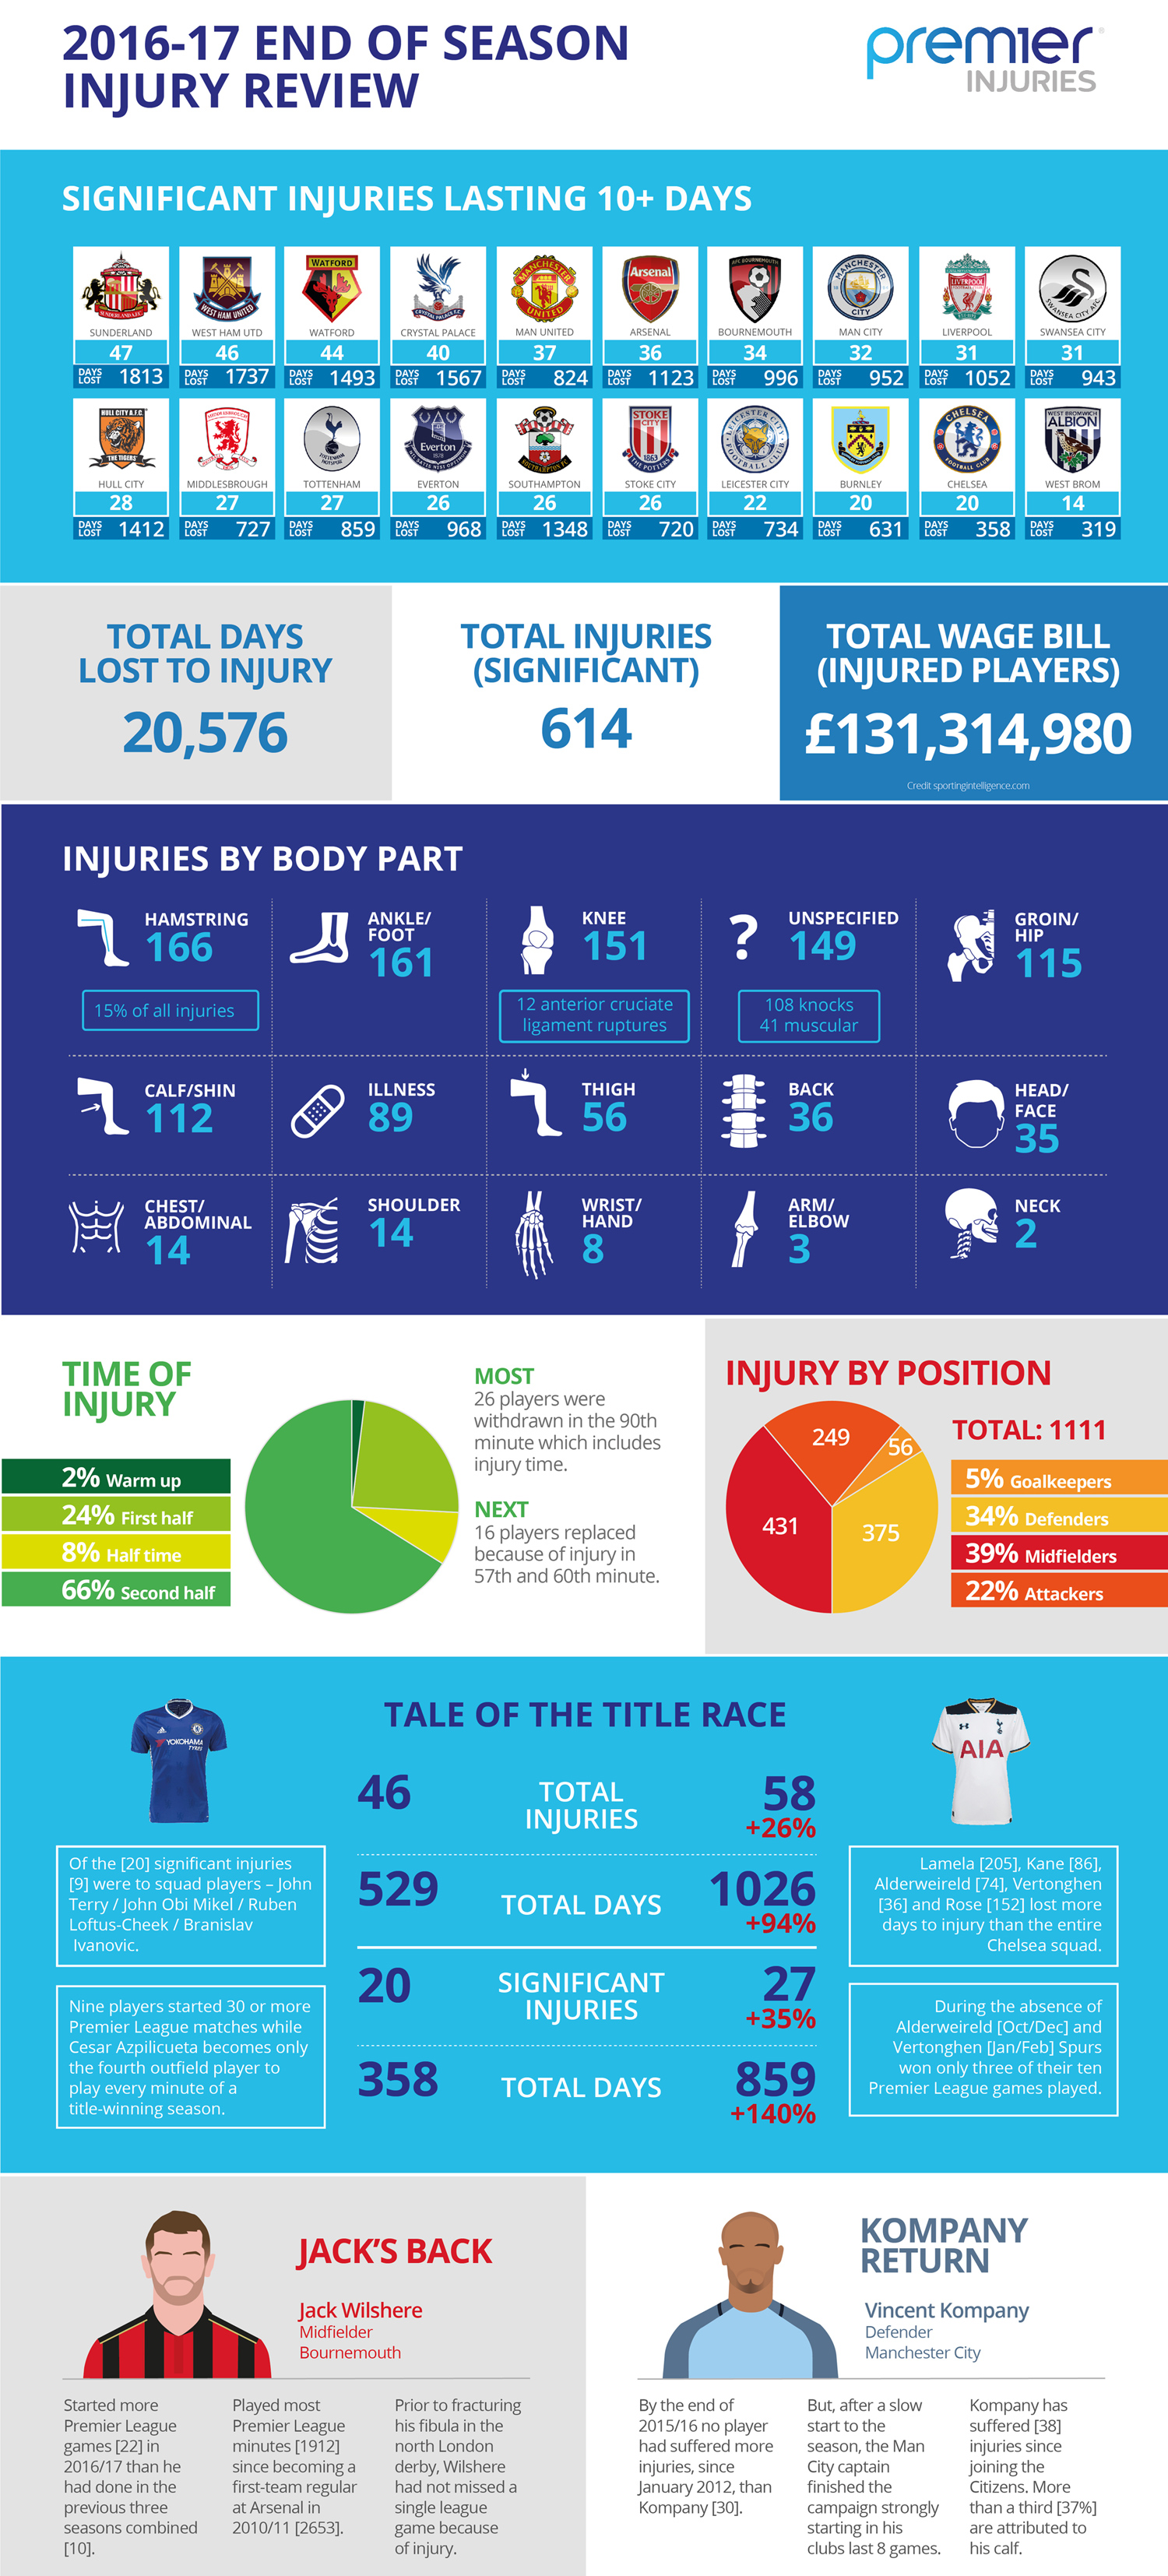 SOCCER: Copa Mundial de Clubes FIFA 2012 infographic